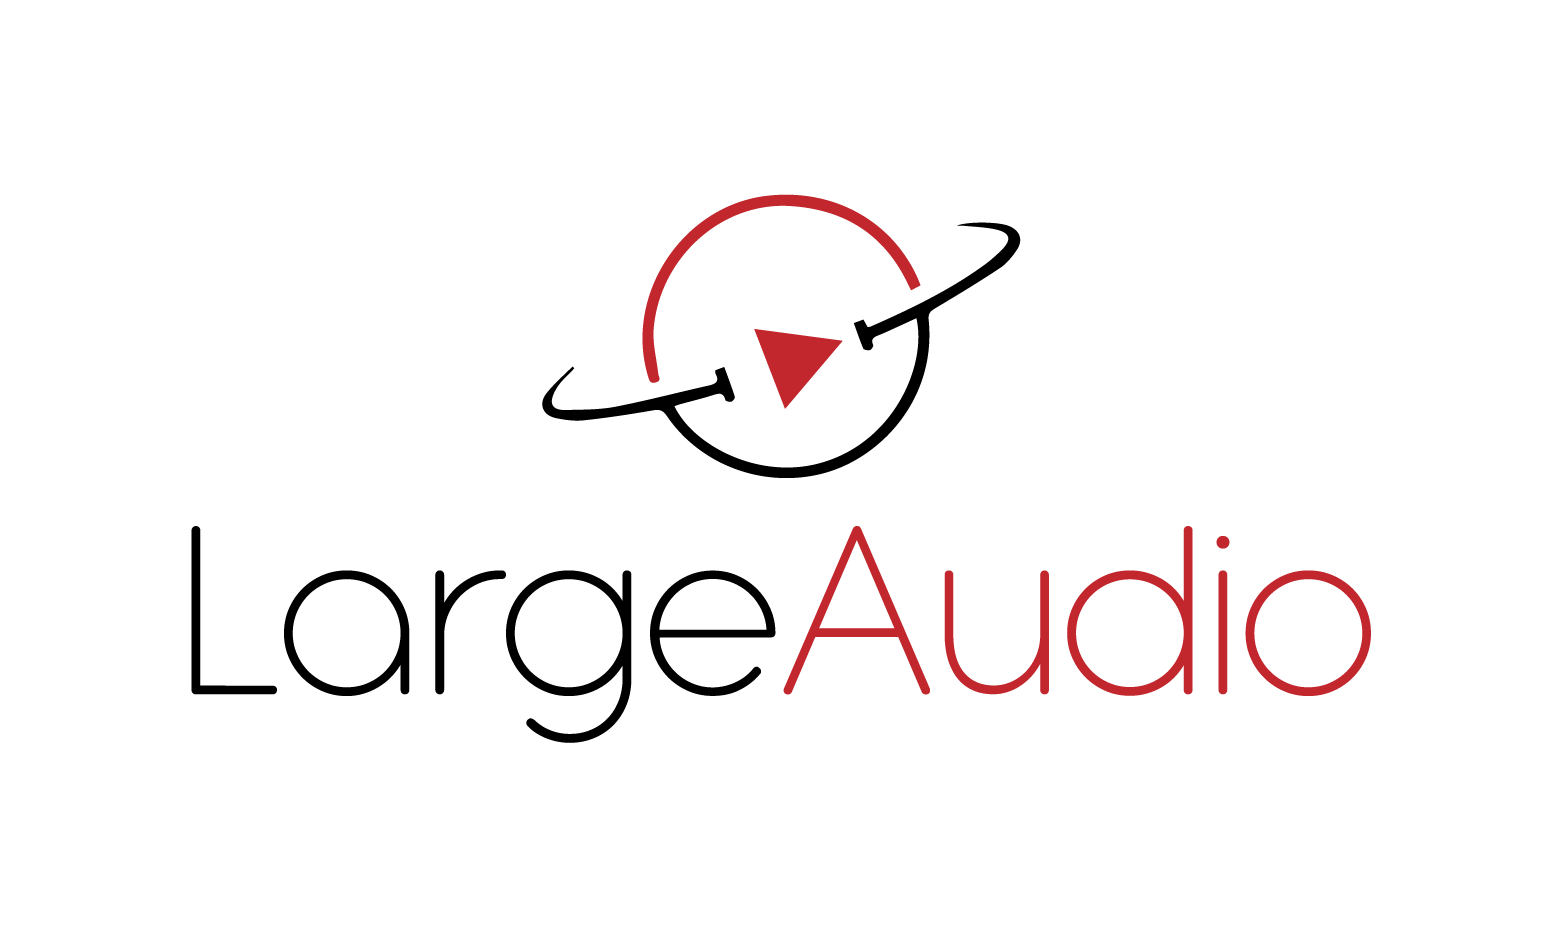 LargeAudio.com - Creative brandable domain for sale